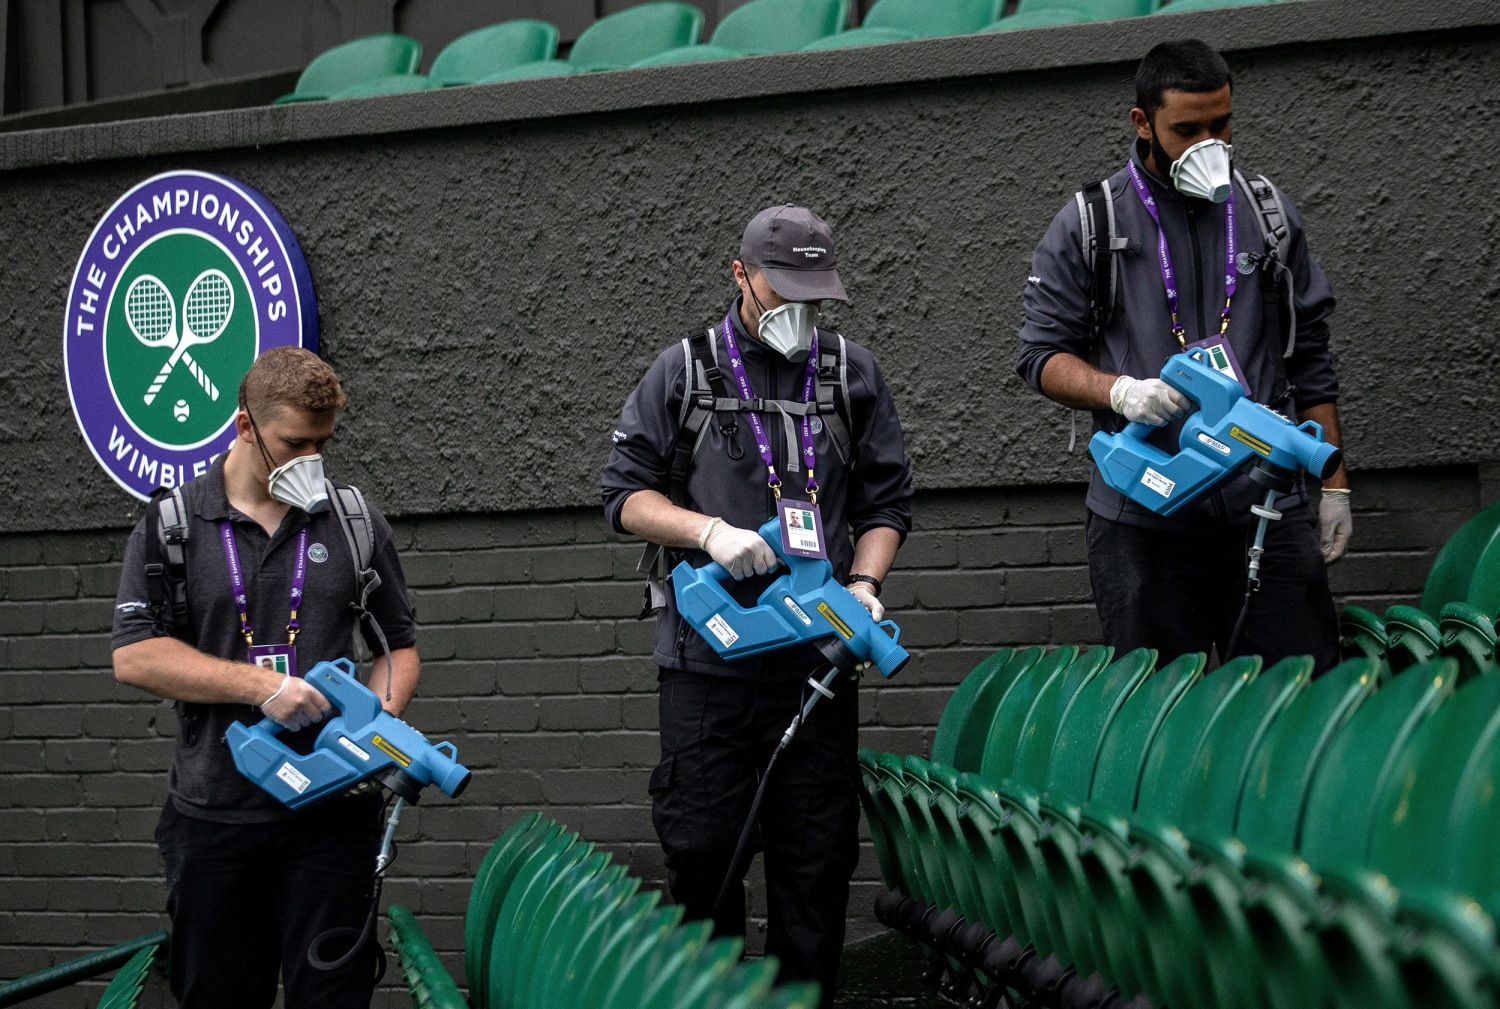 Wimbledon report £44 million profit in 2021, despite Covid-19 restrictions